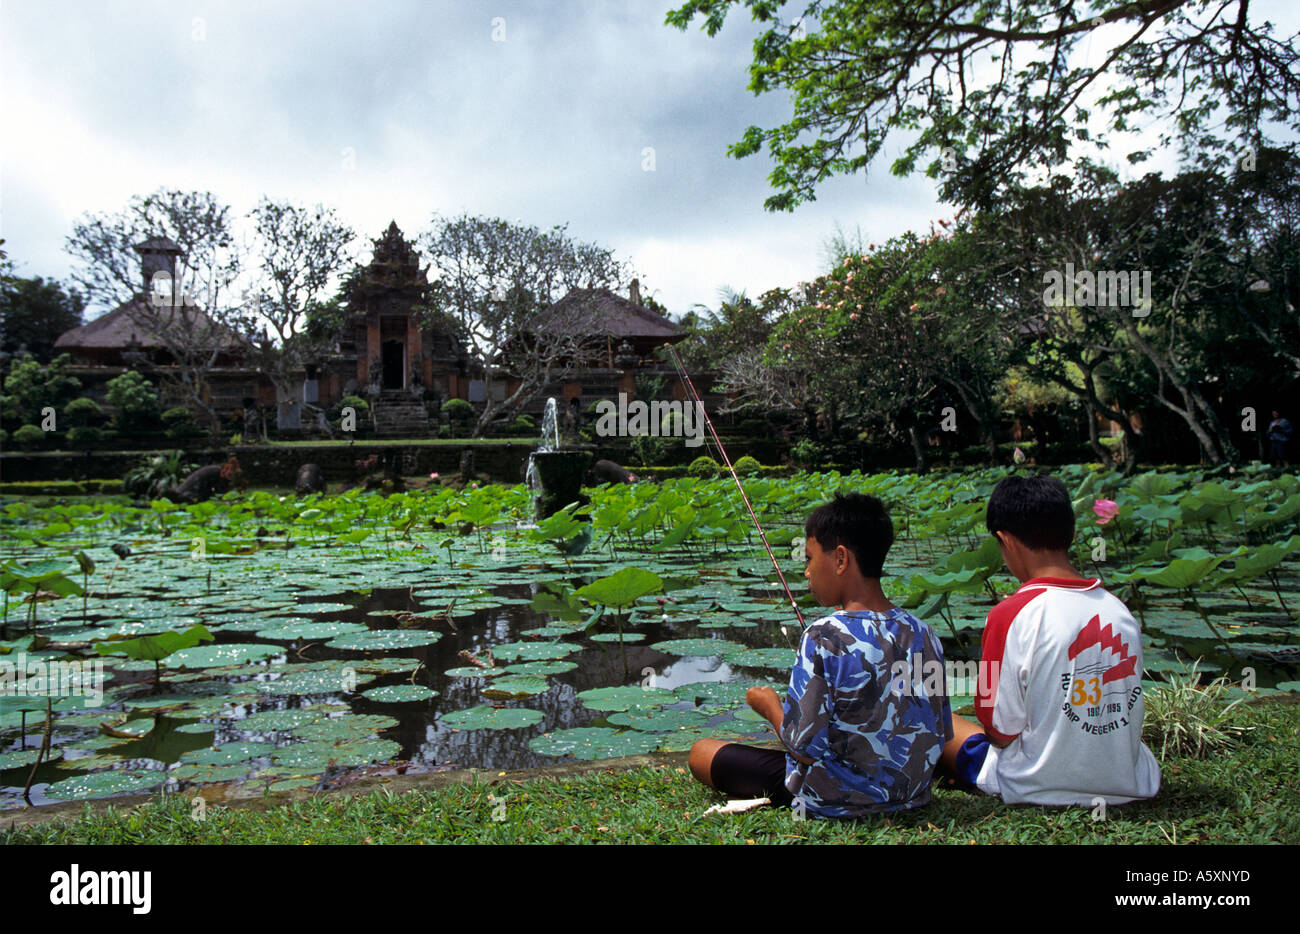 Children angling in the pond of a Balinese temple (Indonesia). Enfants pêchant dans le bassin d'un temple balinais (Indonésie) Stock Photo